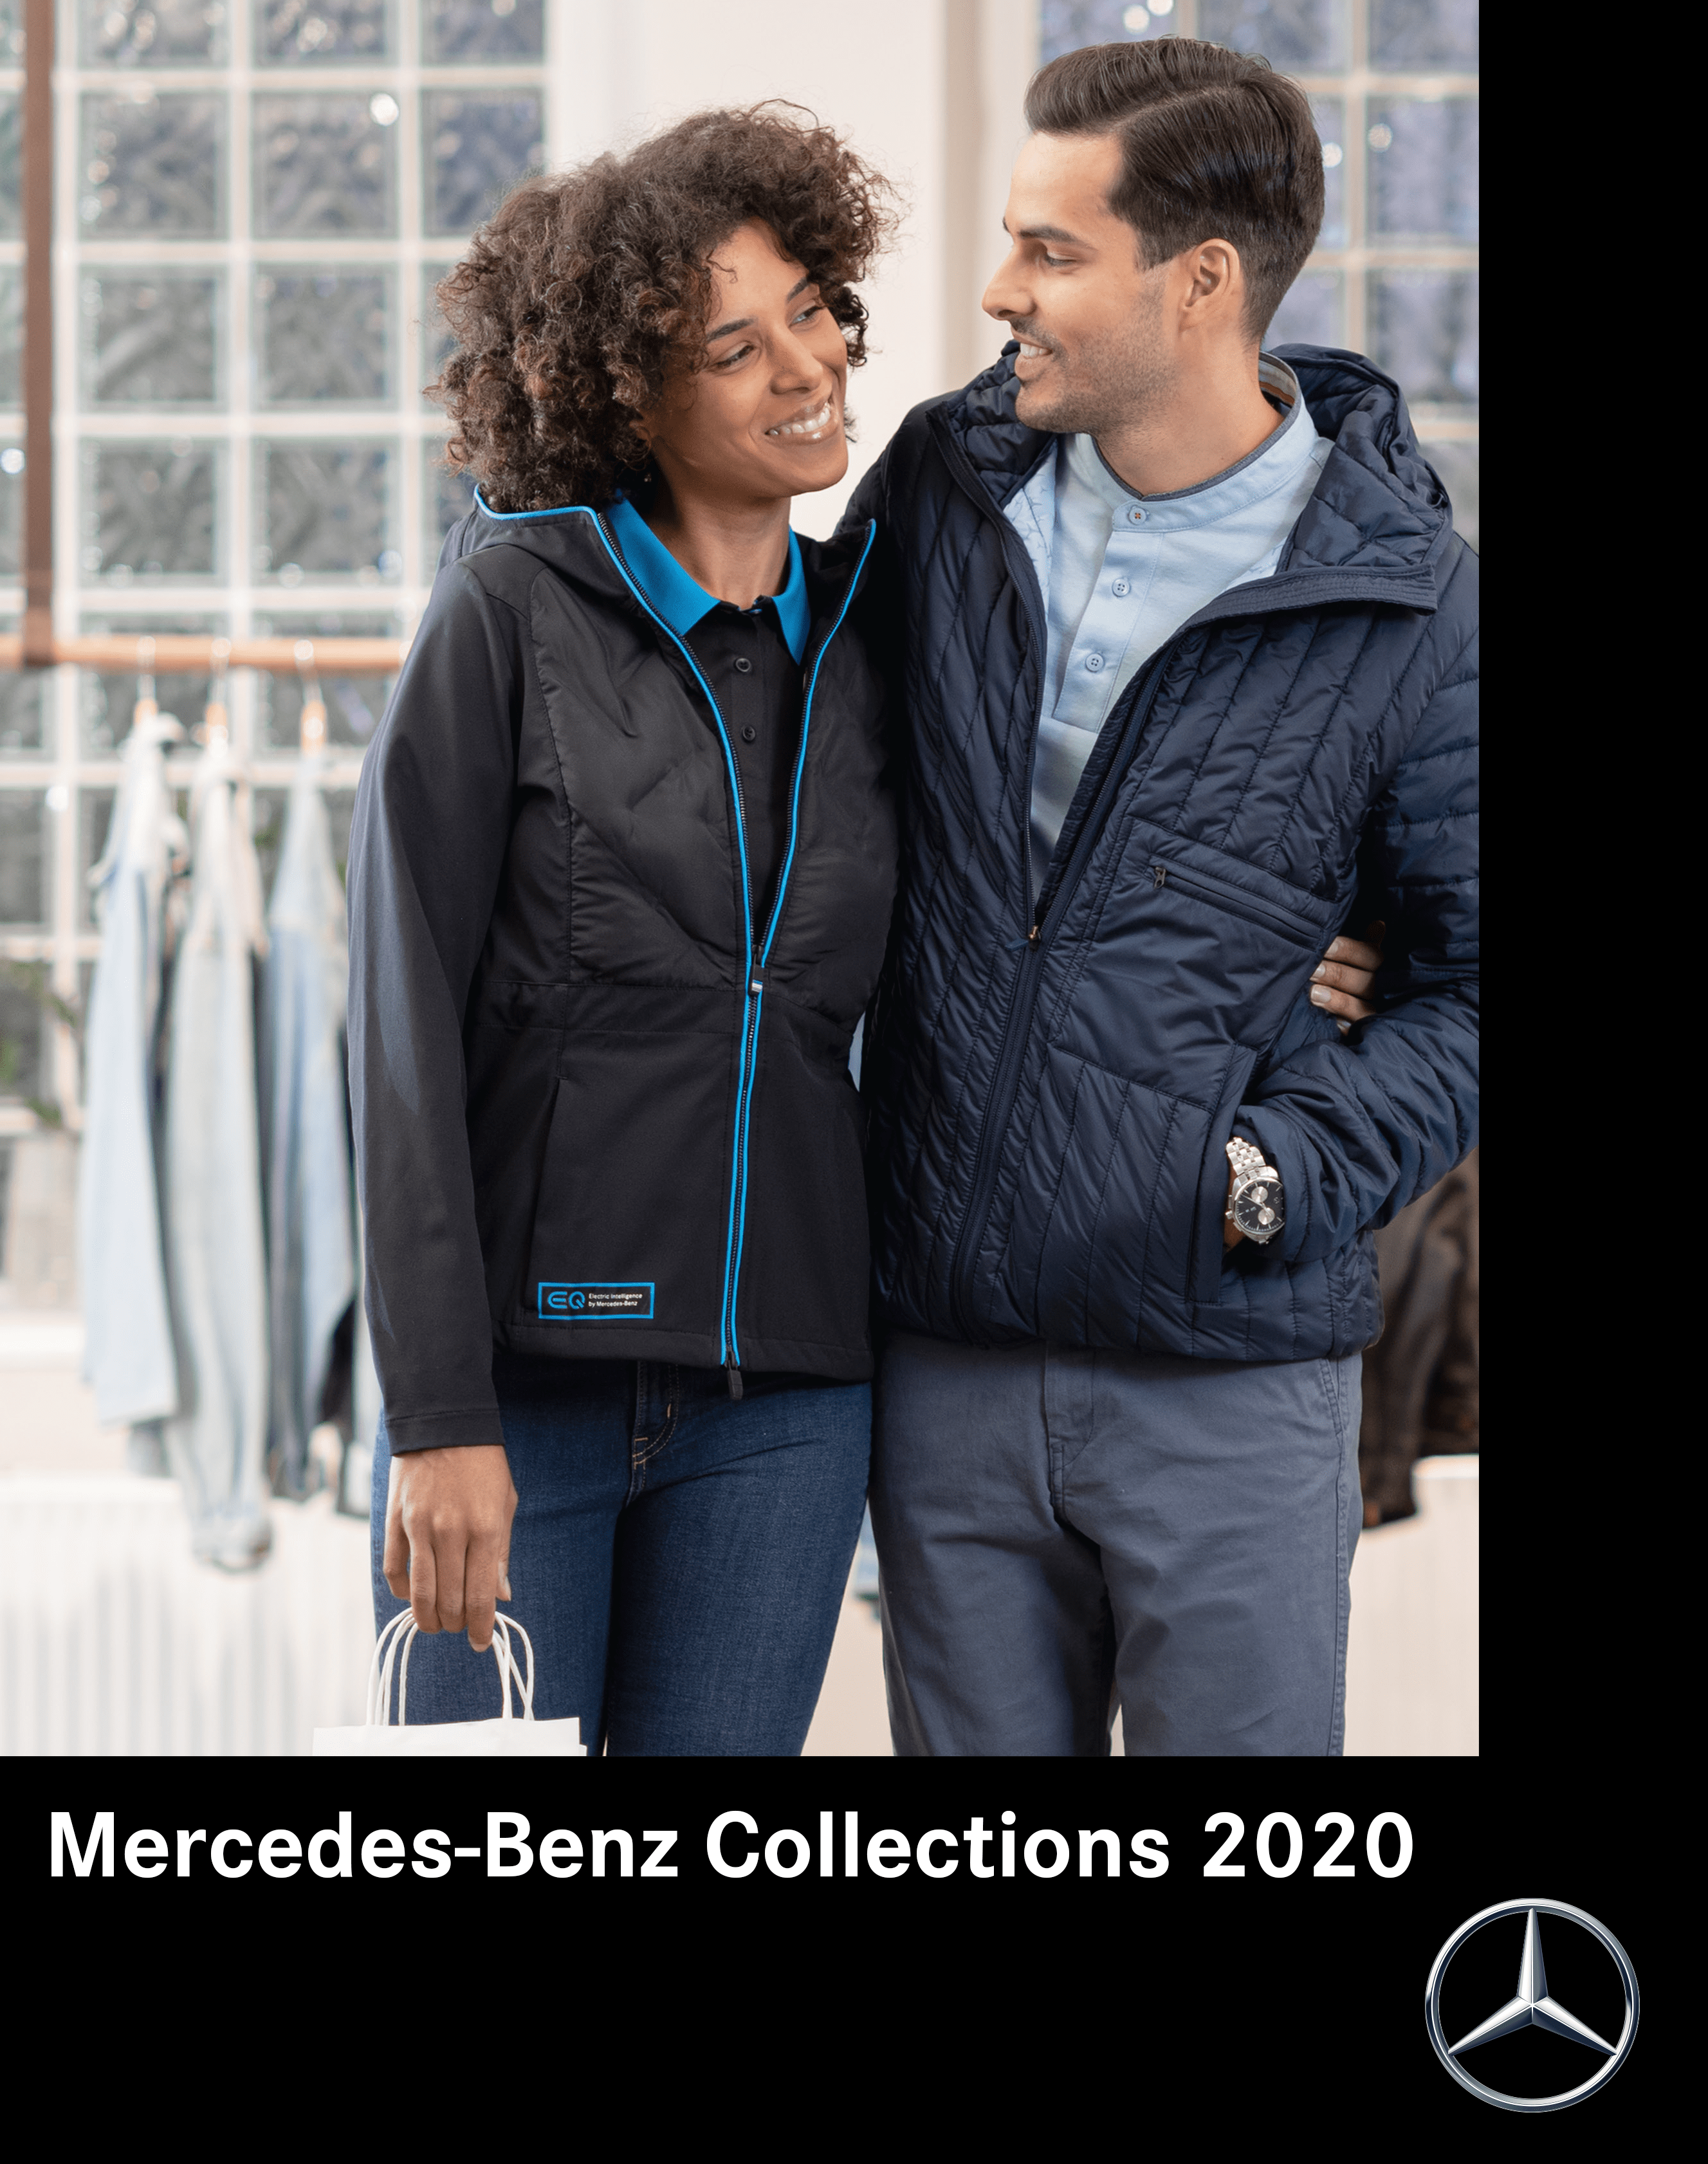 Mercedes-Benz Collection 2020